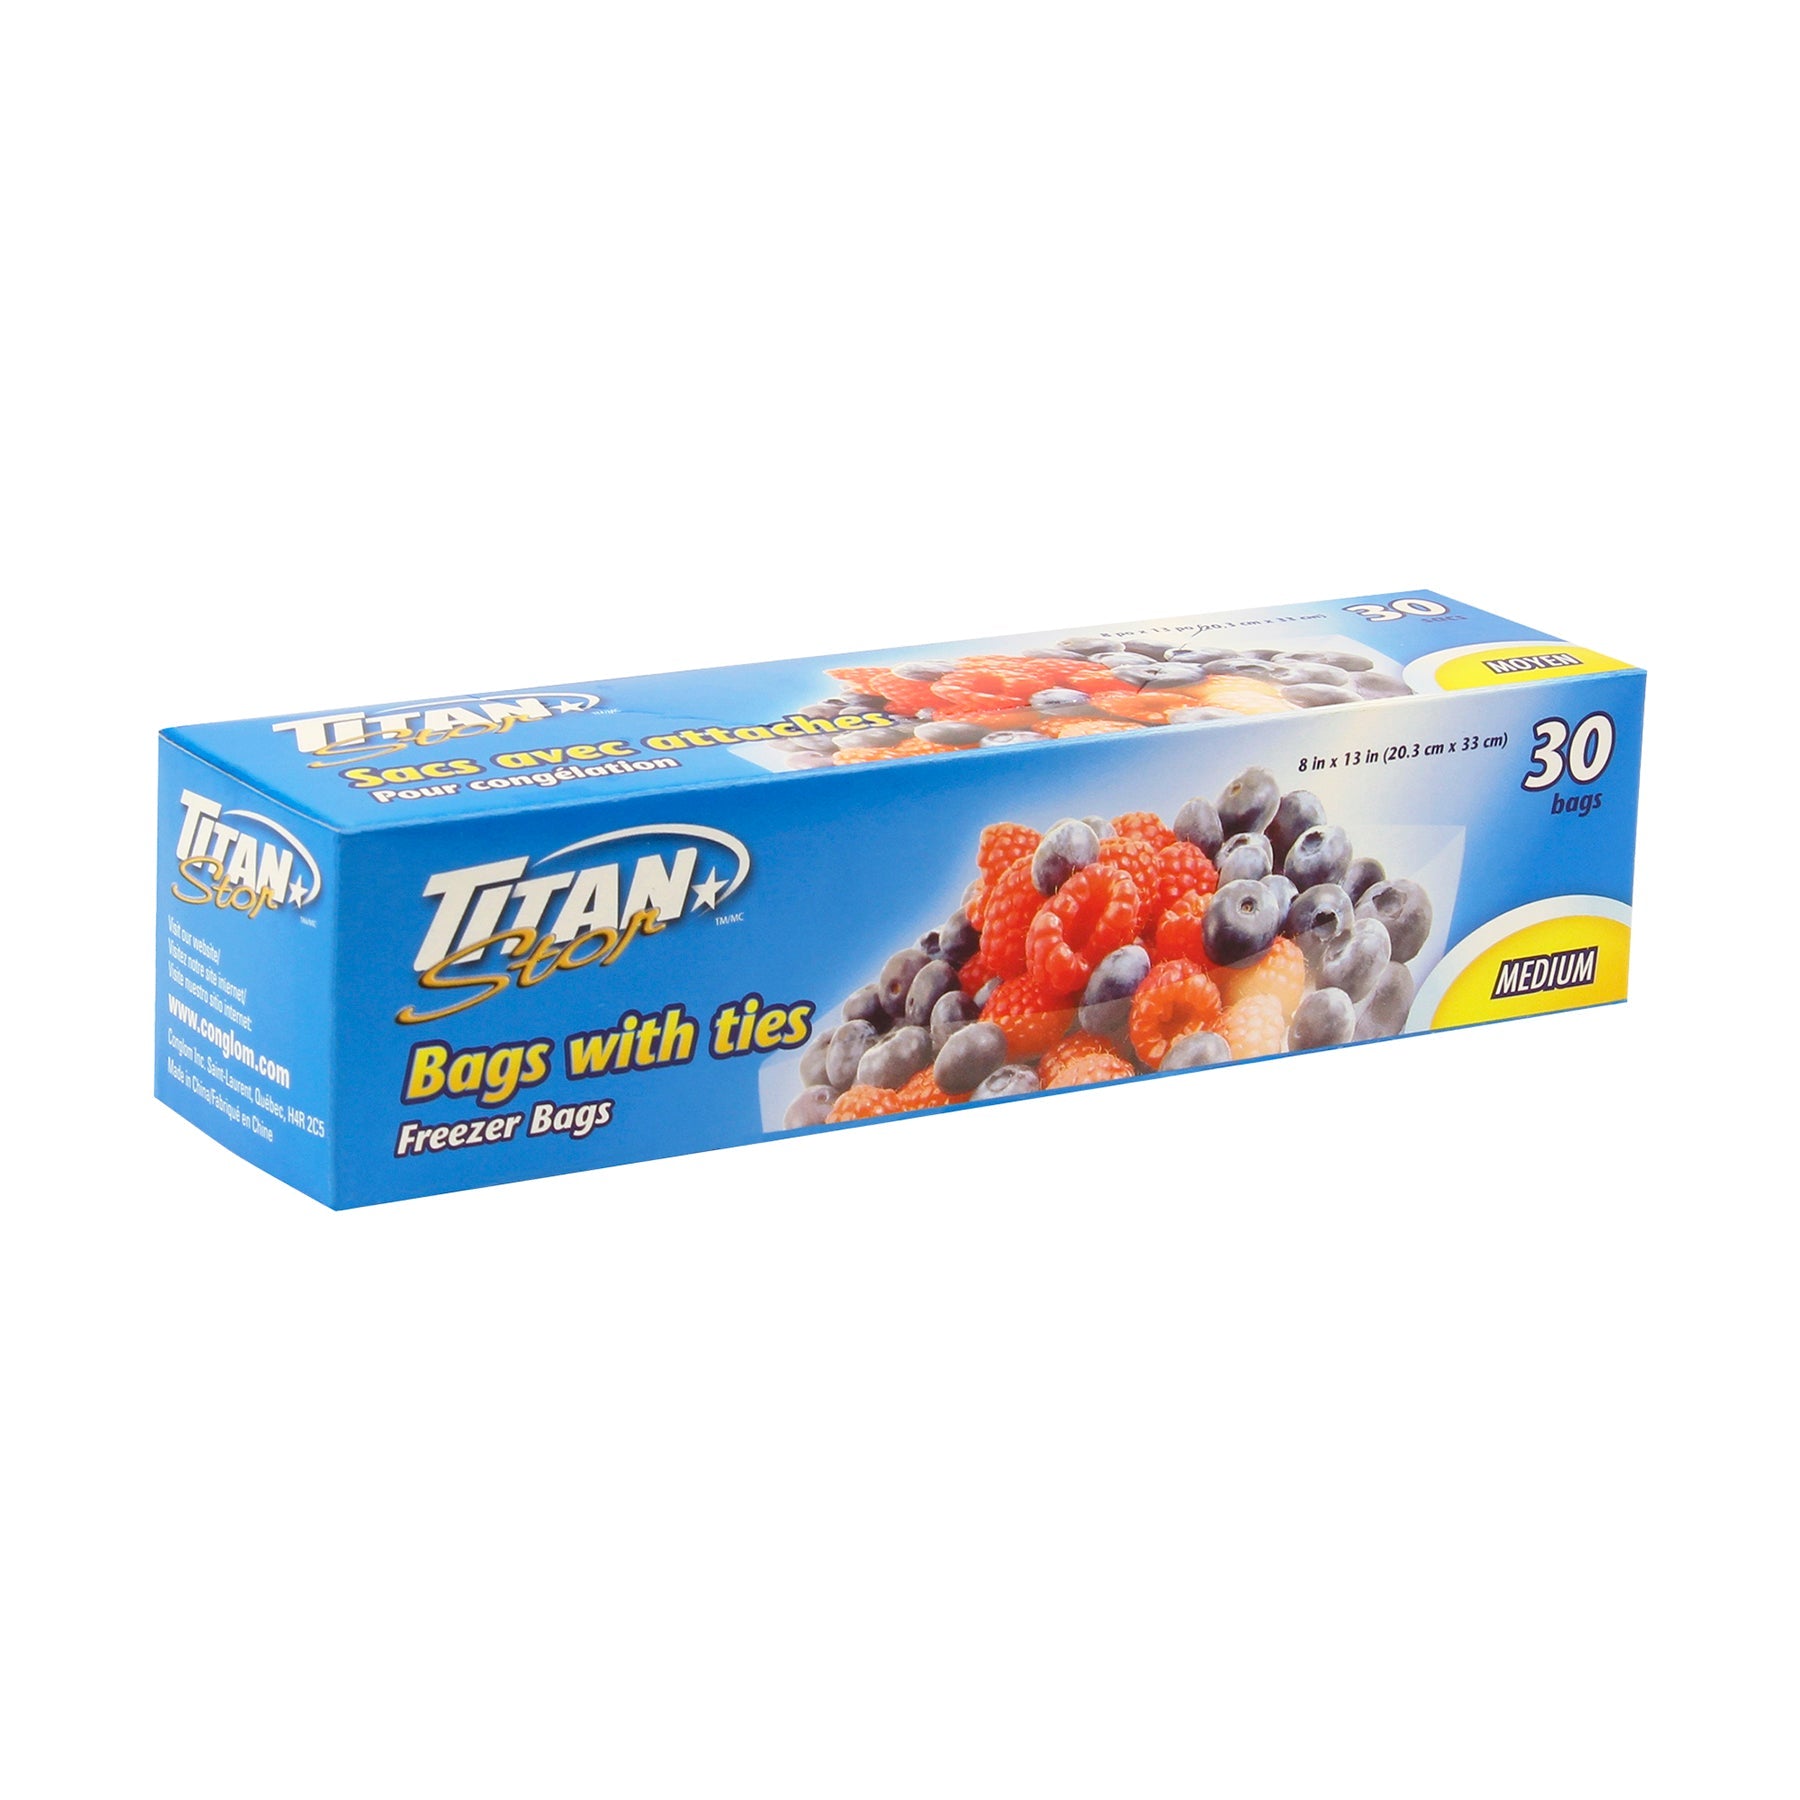 Titan 30 Freezer Bags with Ties Medium 8x13in